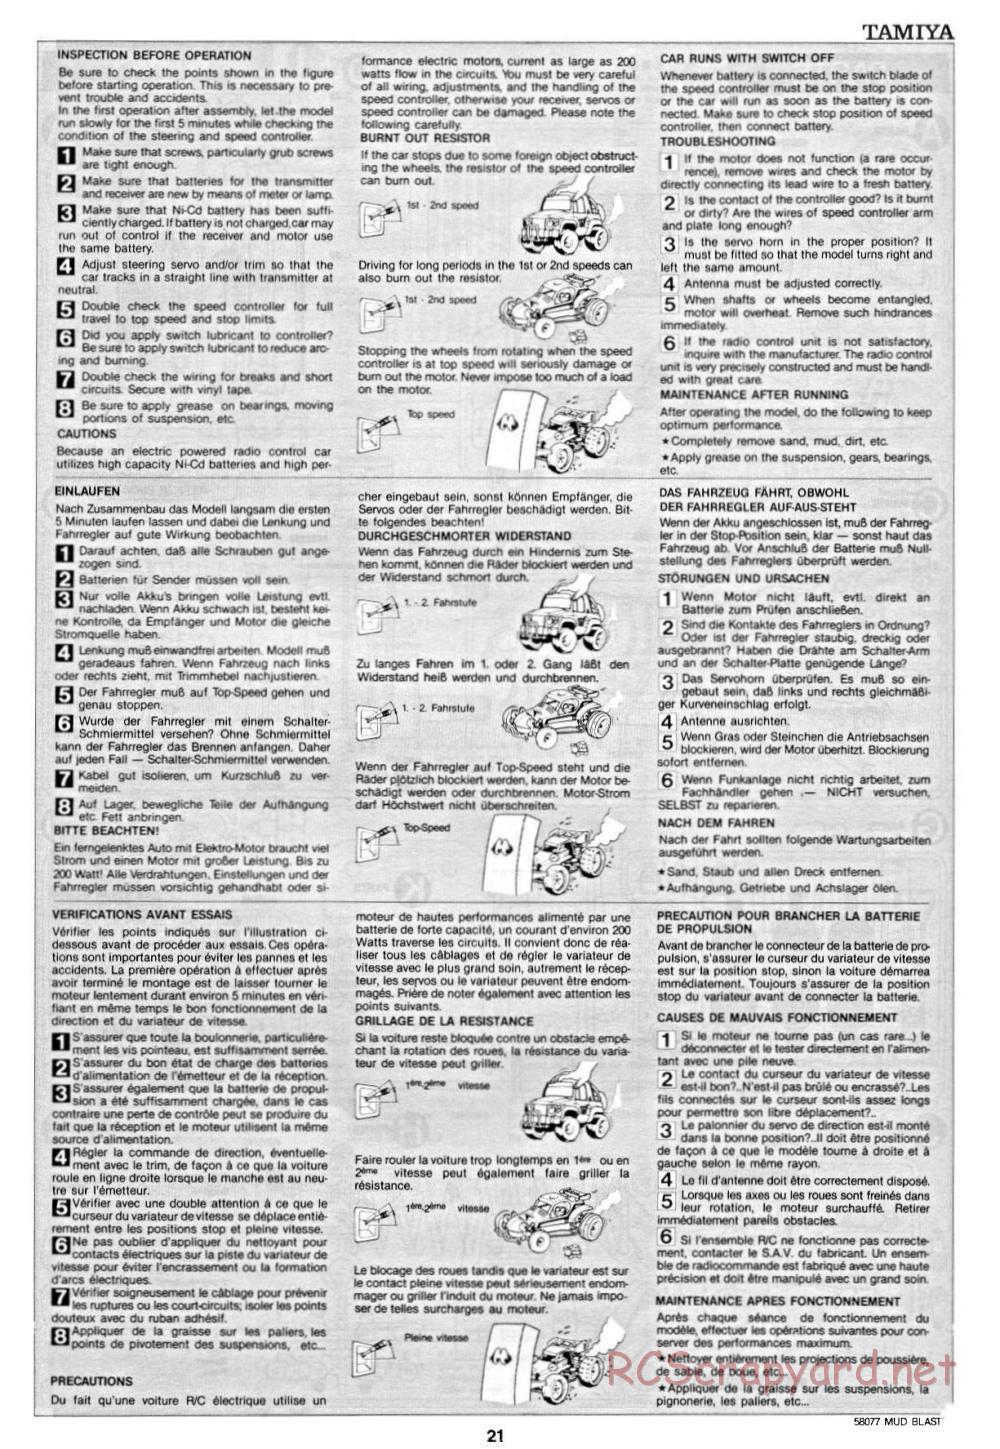 Tamiya - Mud Blaster - 58077 - Manual - Page 21